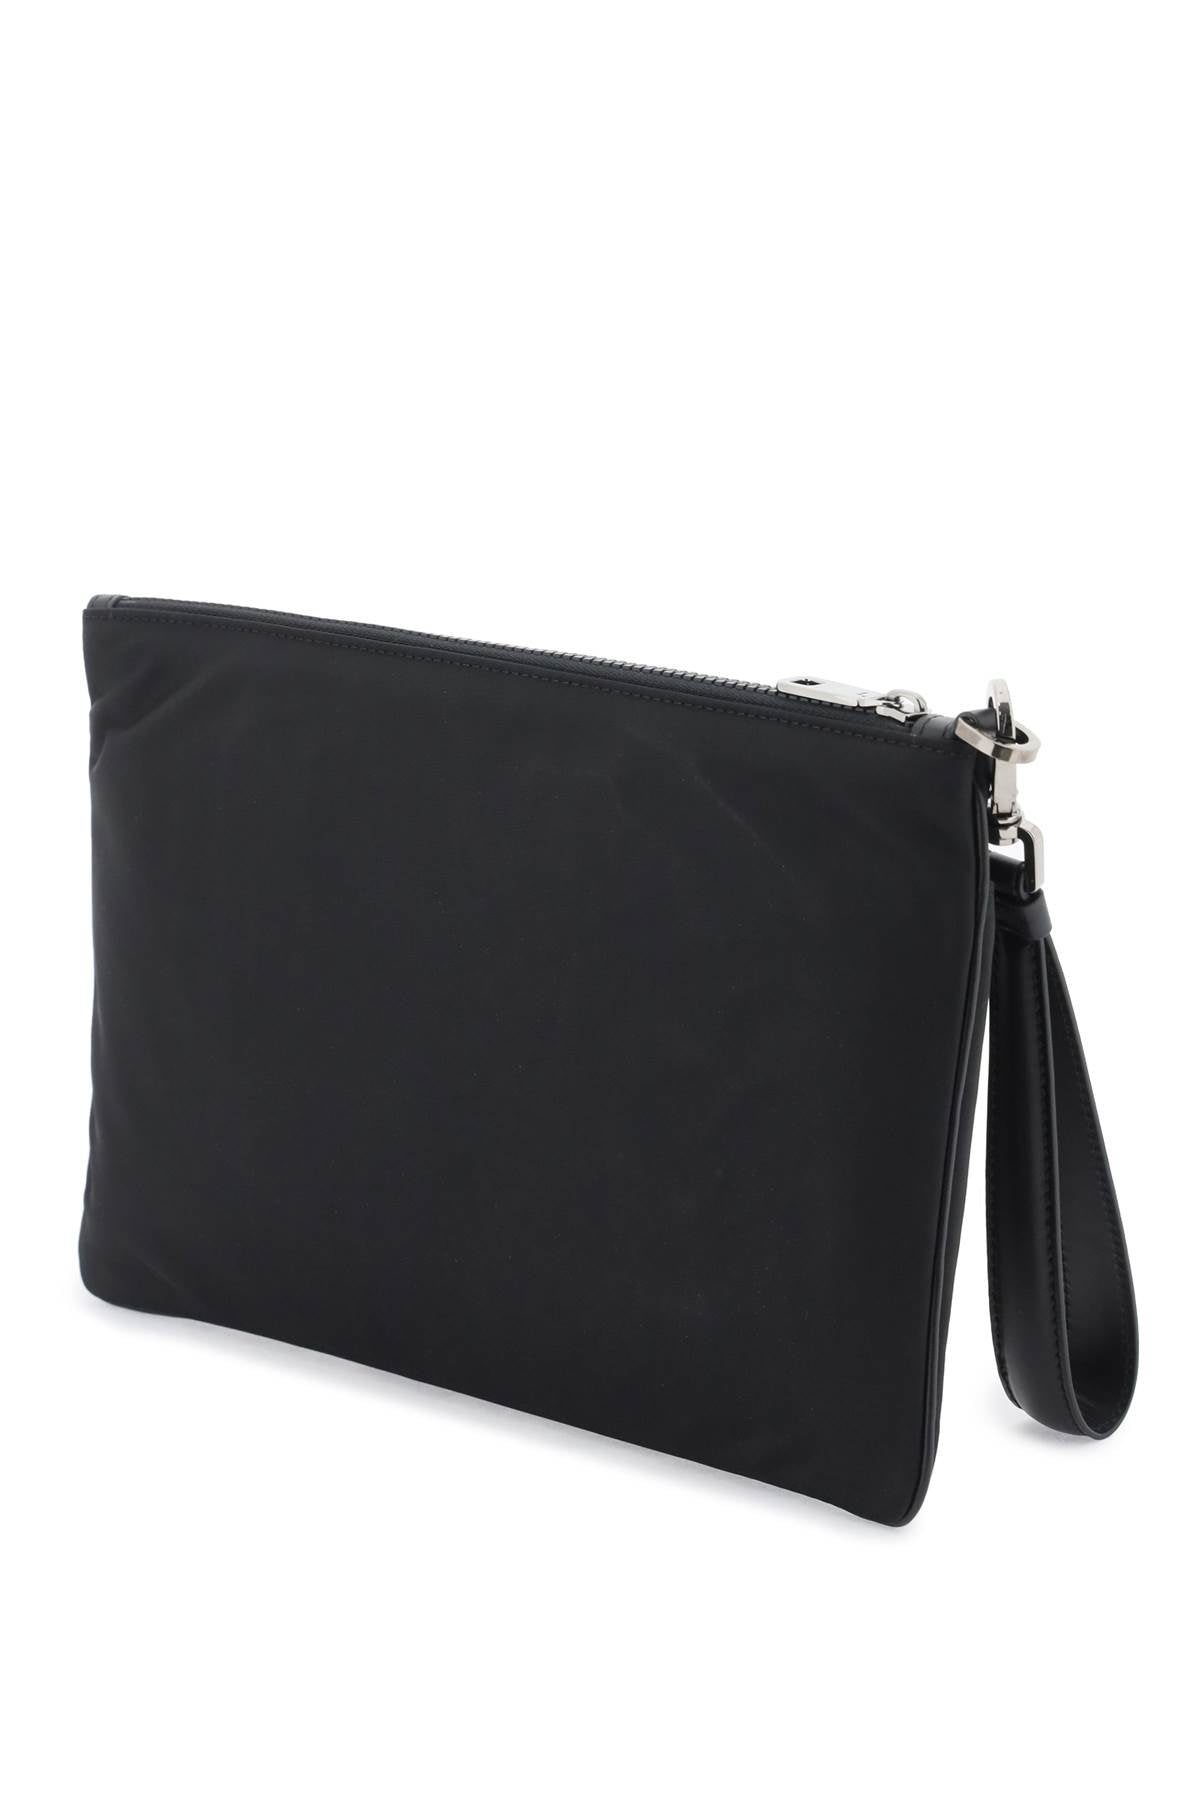 Dolce & gabbana nylon pouch with rubberized logo-1